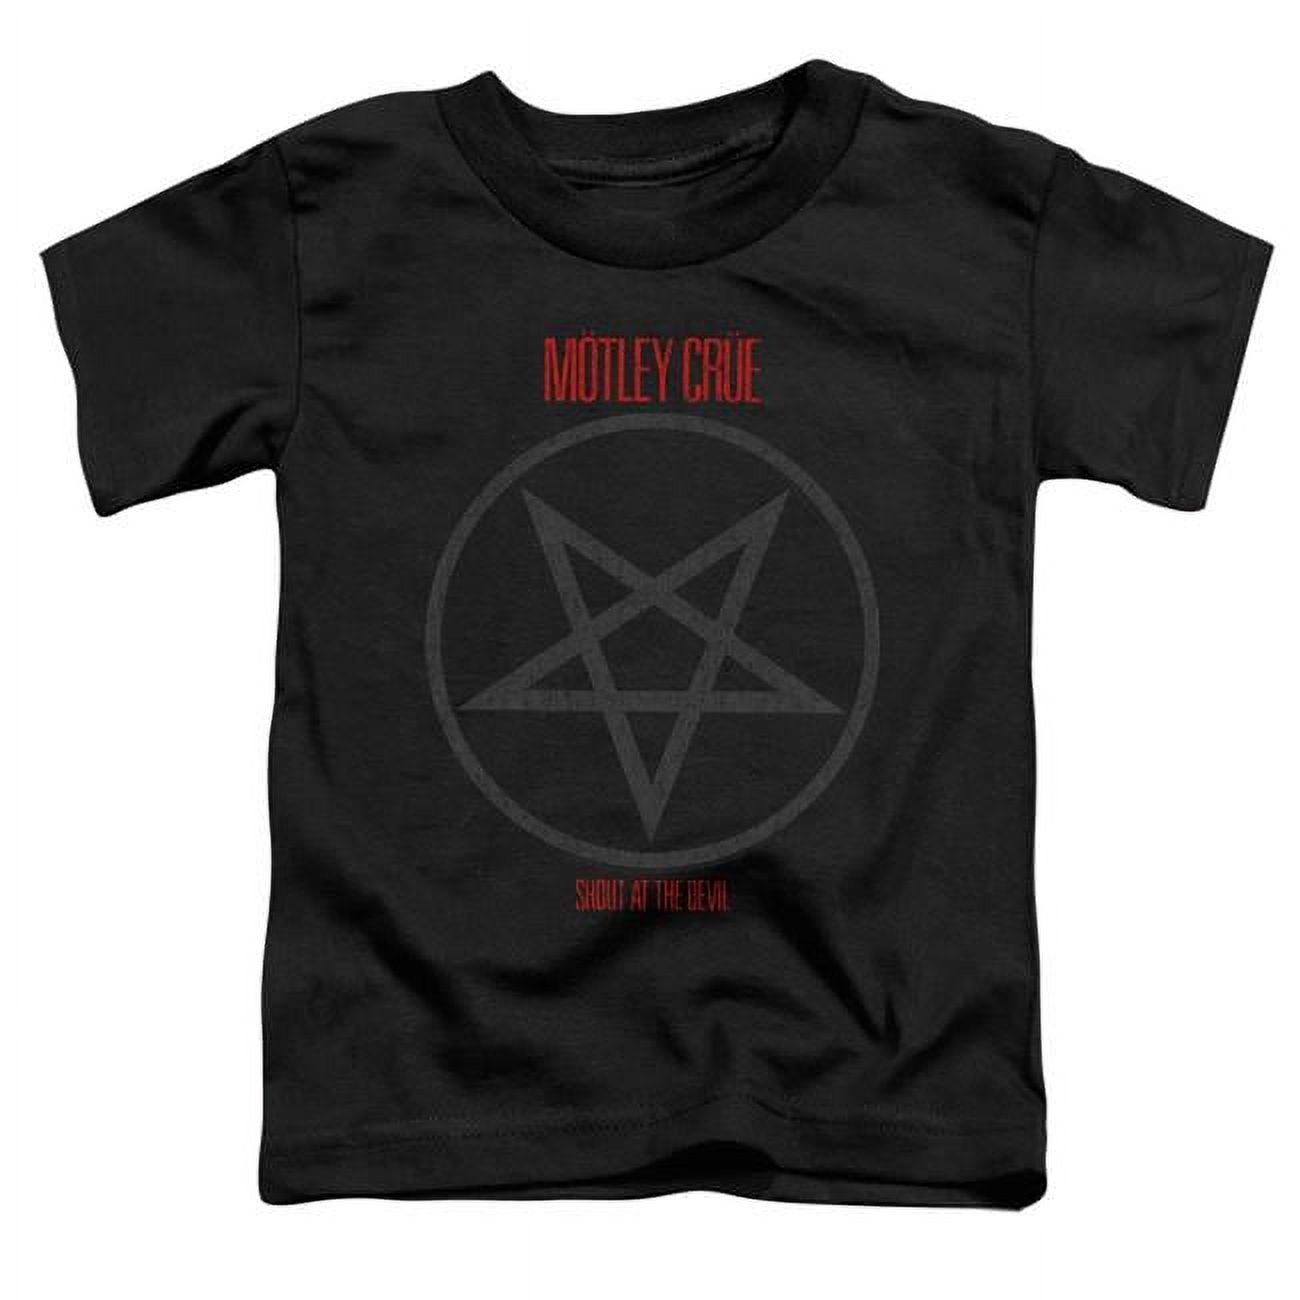 Trevco  MCRU102-TT-1 Motley Crue & Shout At The Devil Toddler Short Sleeve T-Shirt&#44; Black - Small 2T - image 1 of 1